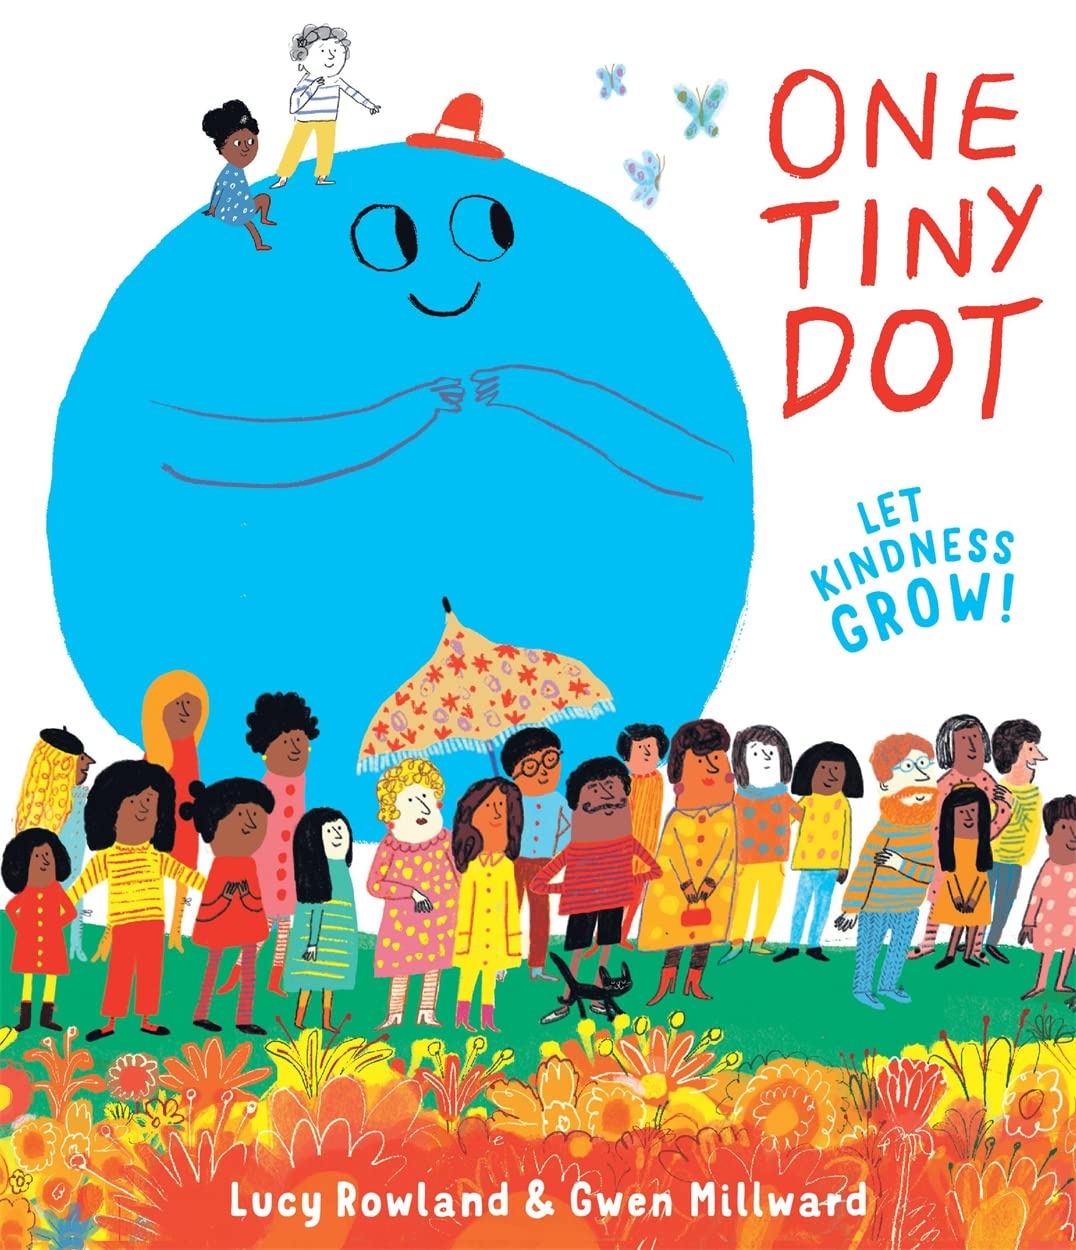 One Tiny Dot - Let Kindness Grow!